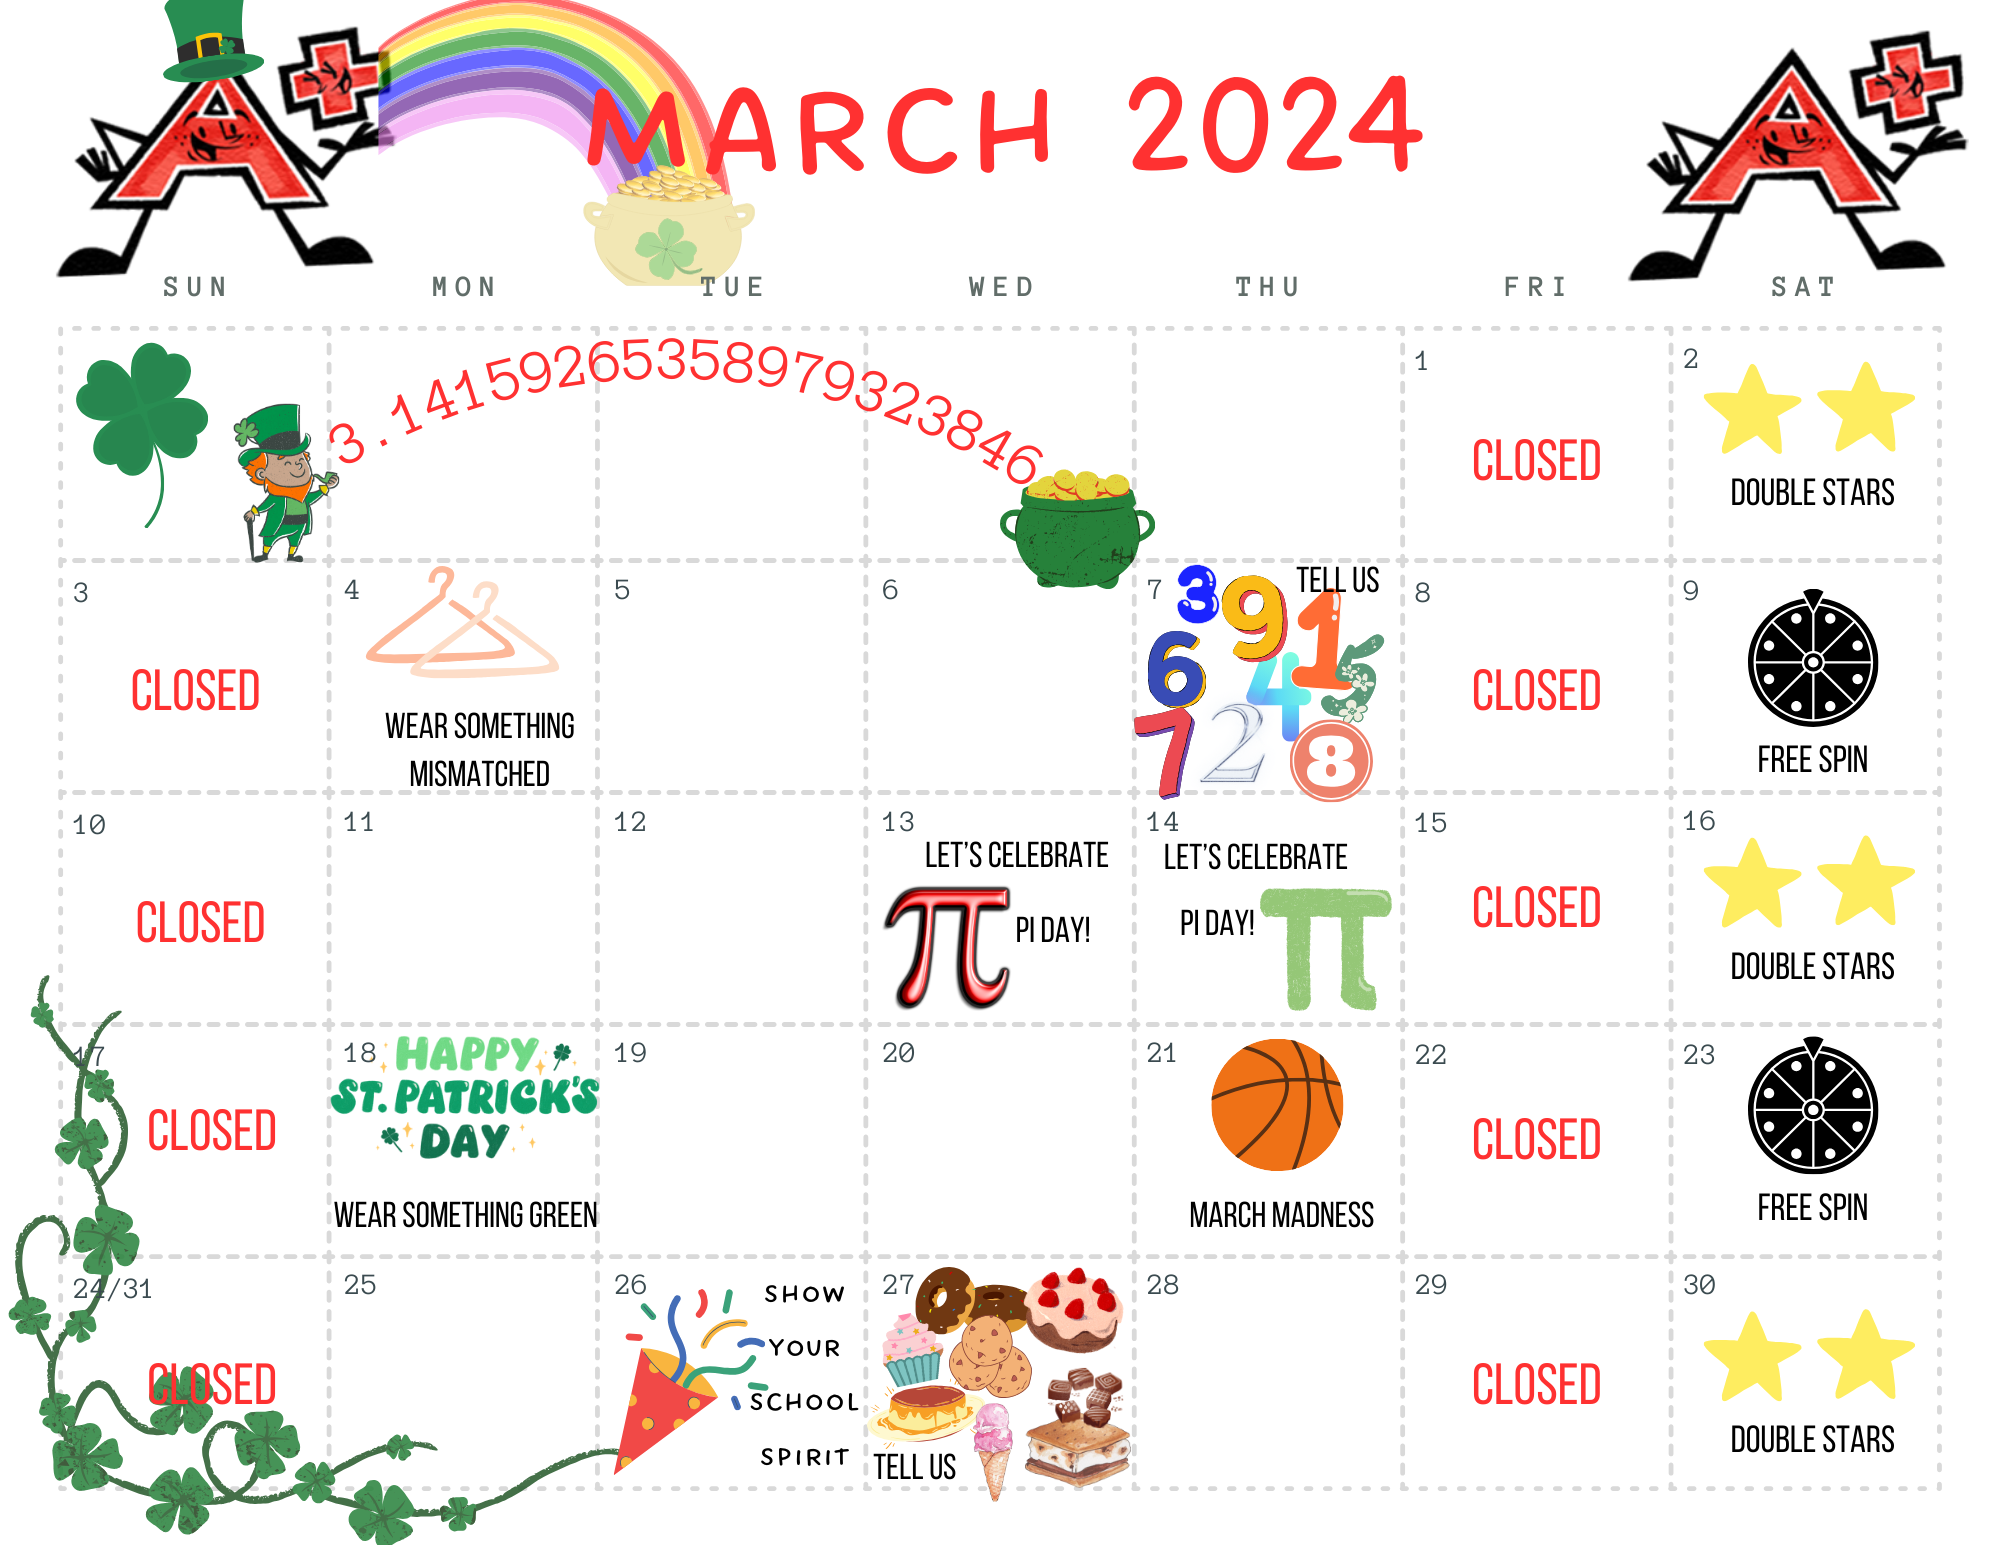 March 2024 Fun Days